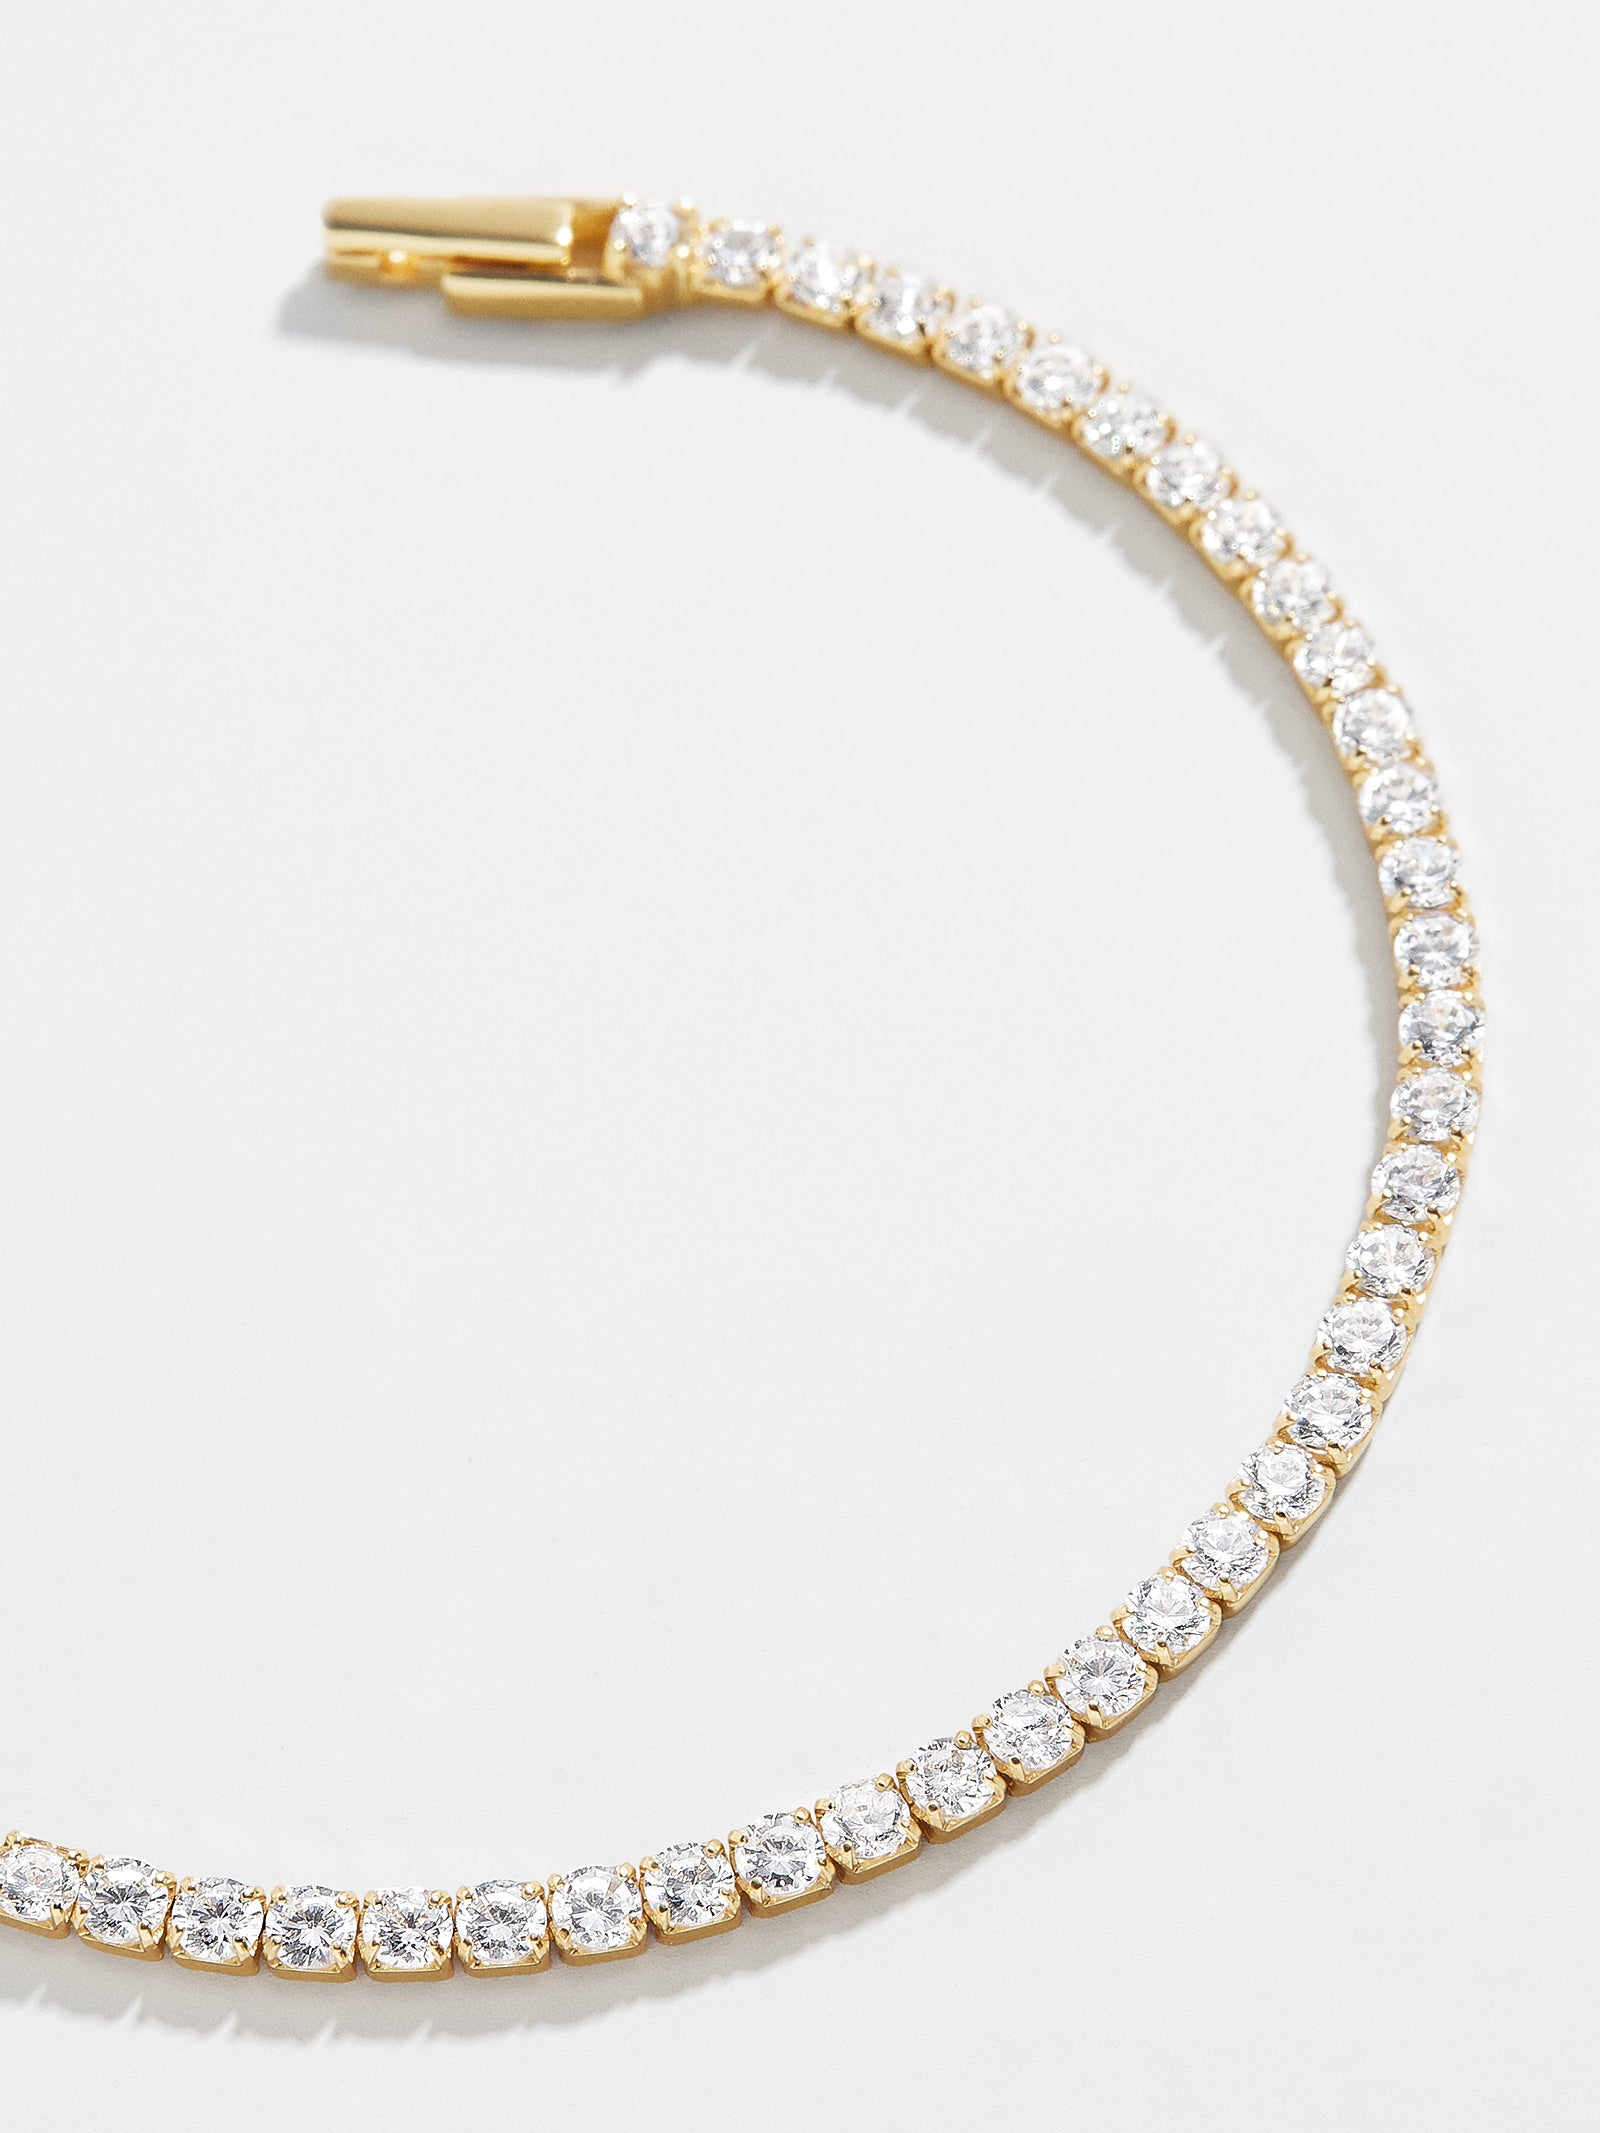 Inez Initial Bracelet/Anklet with Diamond - 14K Solid Gold